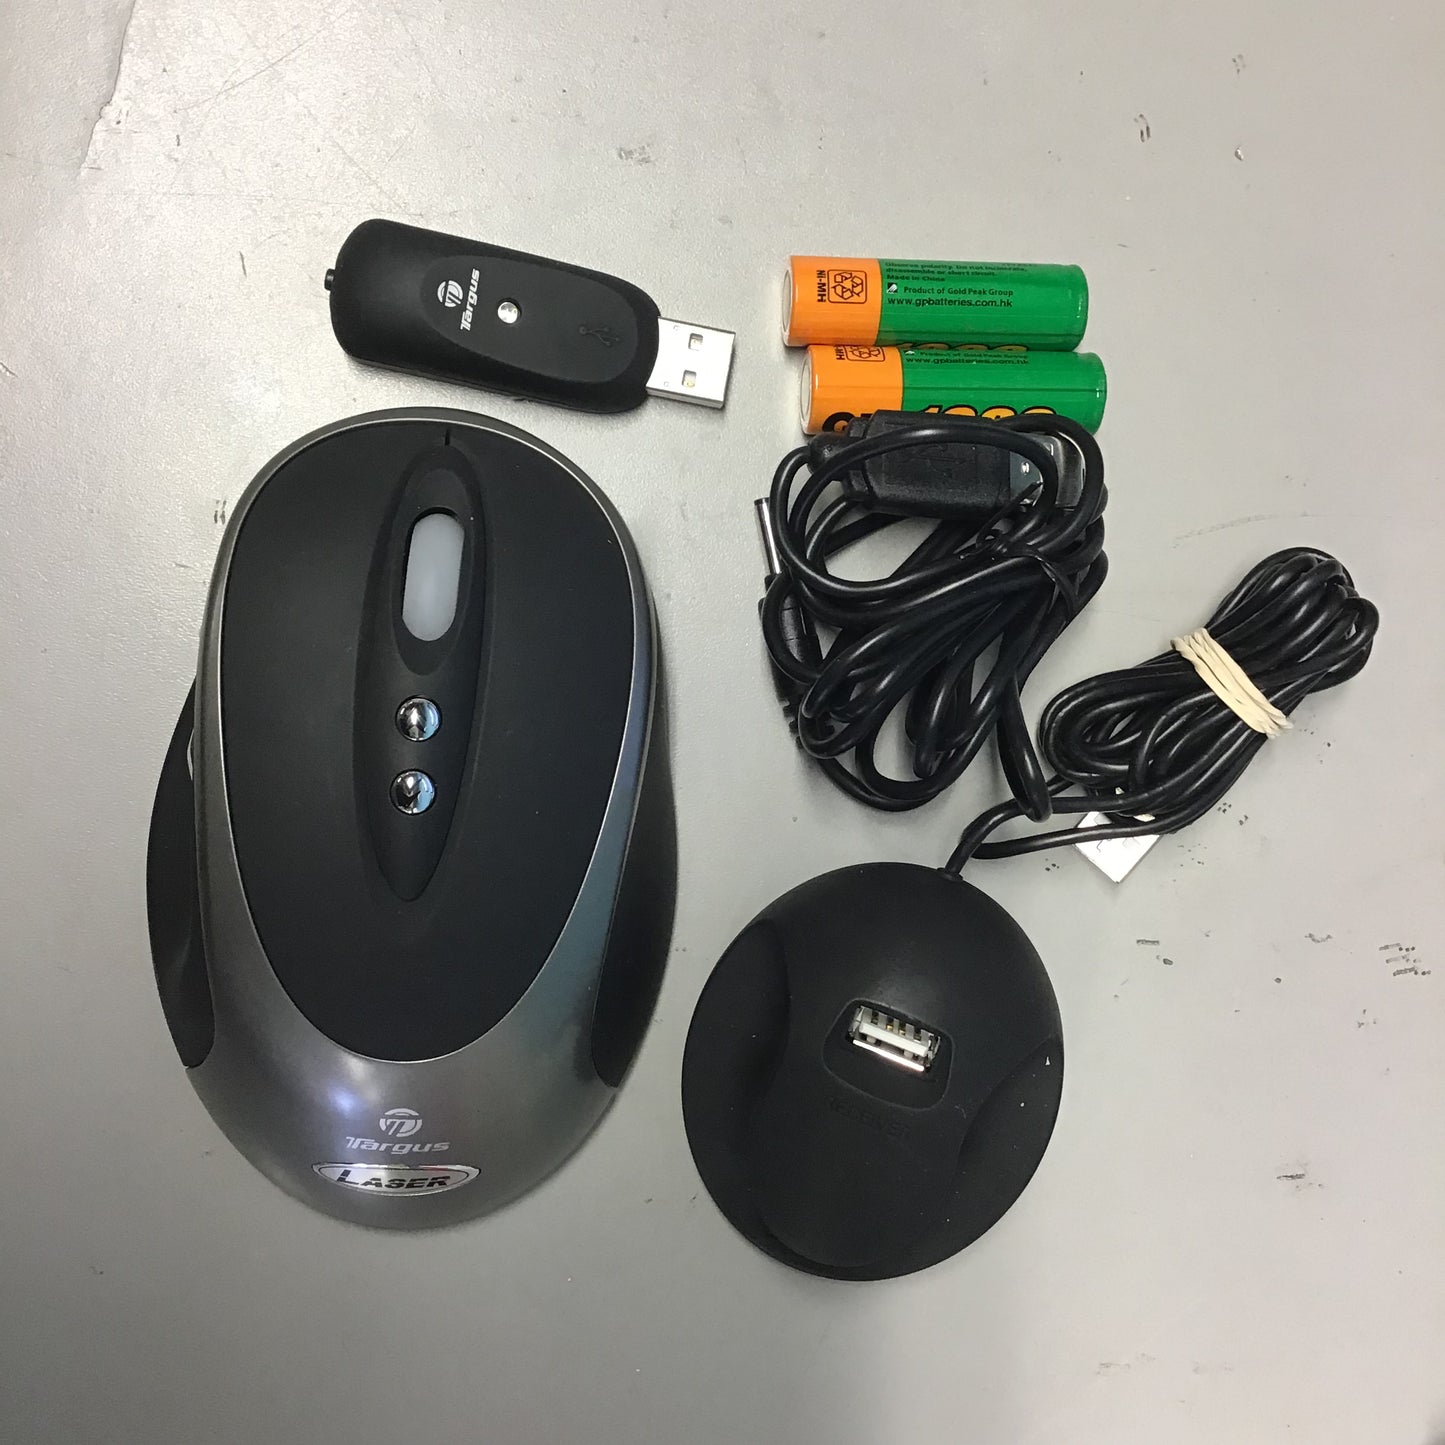 Targus 8-Button Laser Wireless Mouse